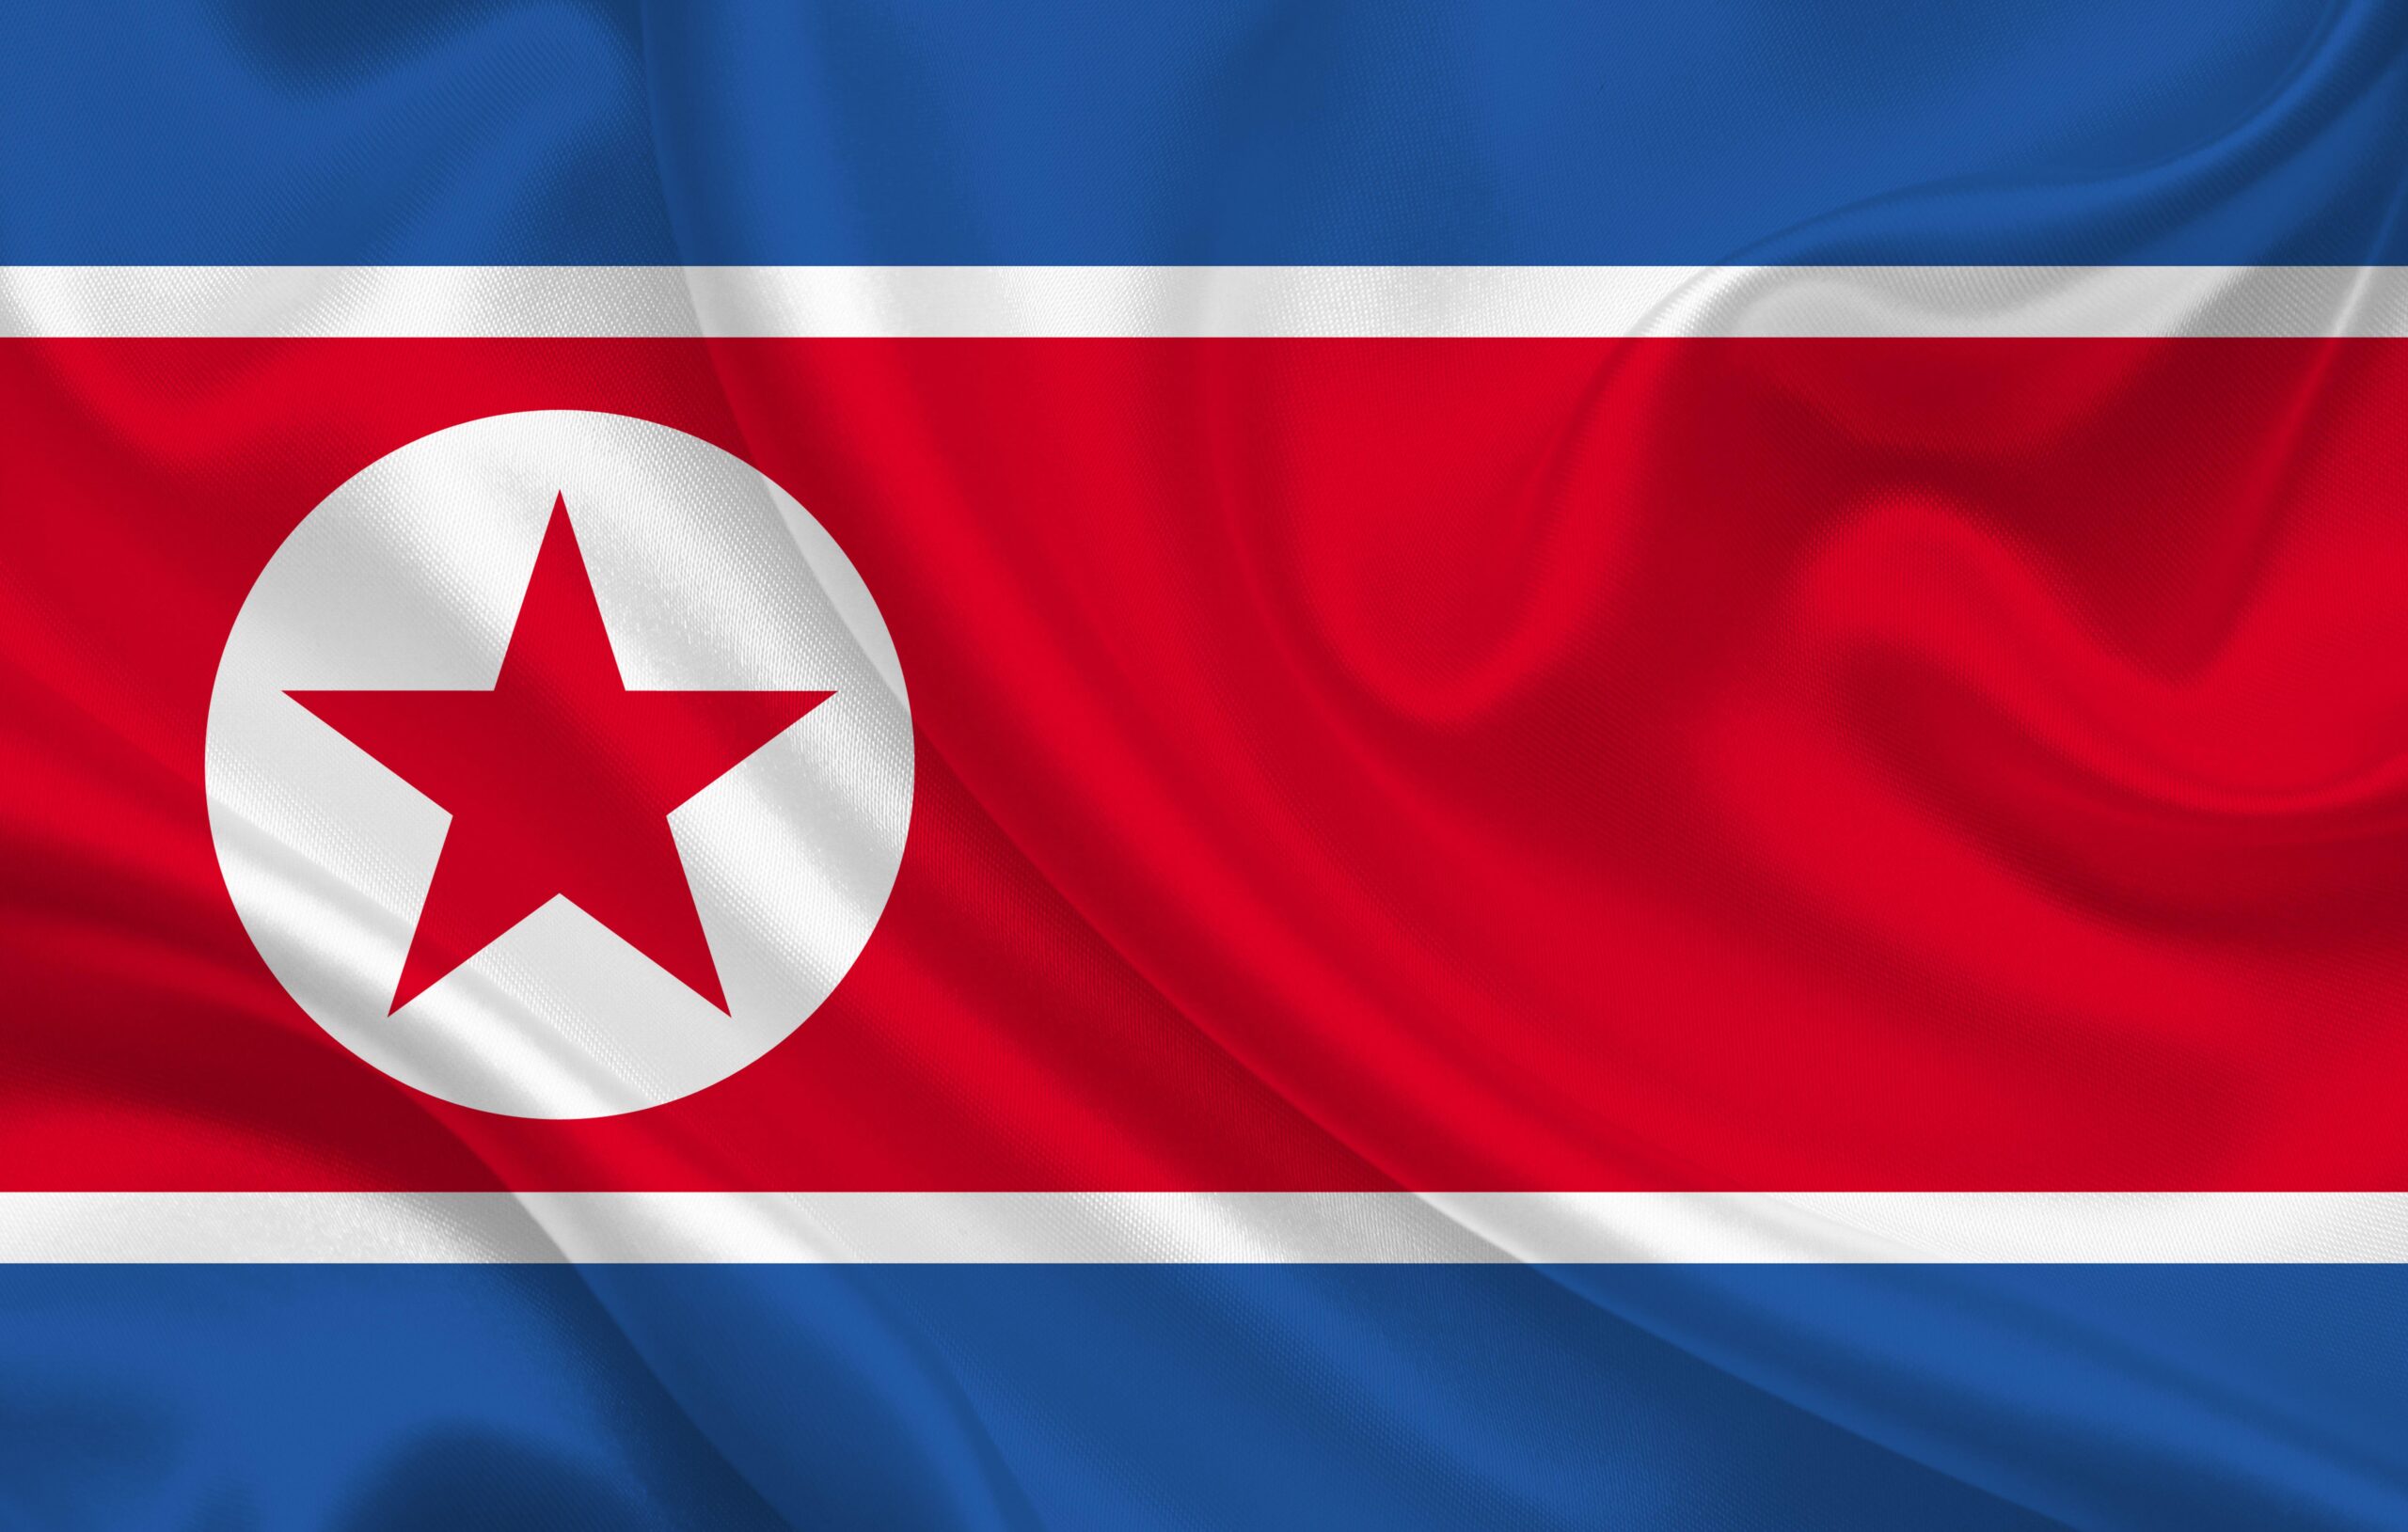 North Korea’s Lazarus APT Uses GUI Framework to Build Stealthy RAT – Source: www.darkreading.com